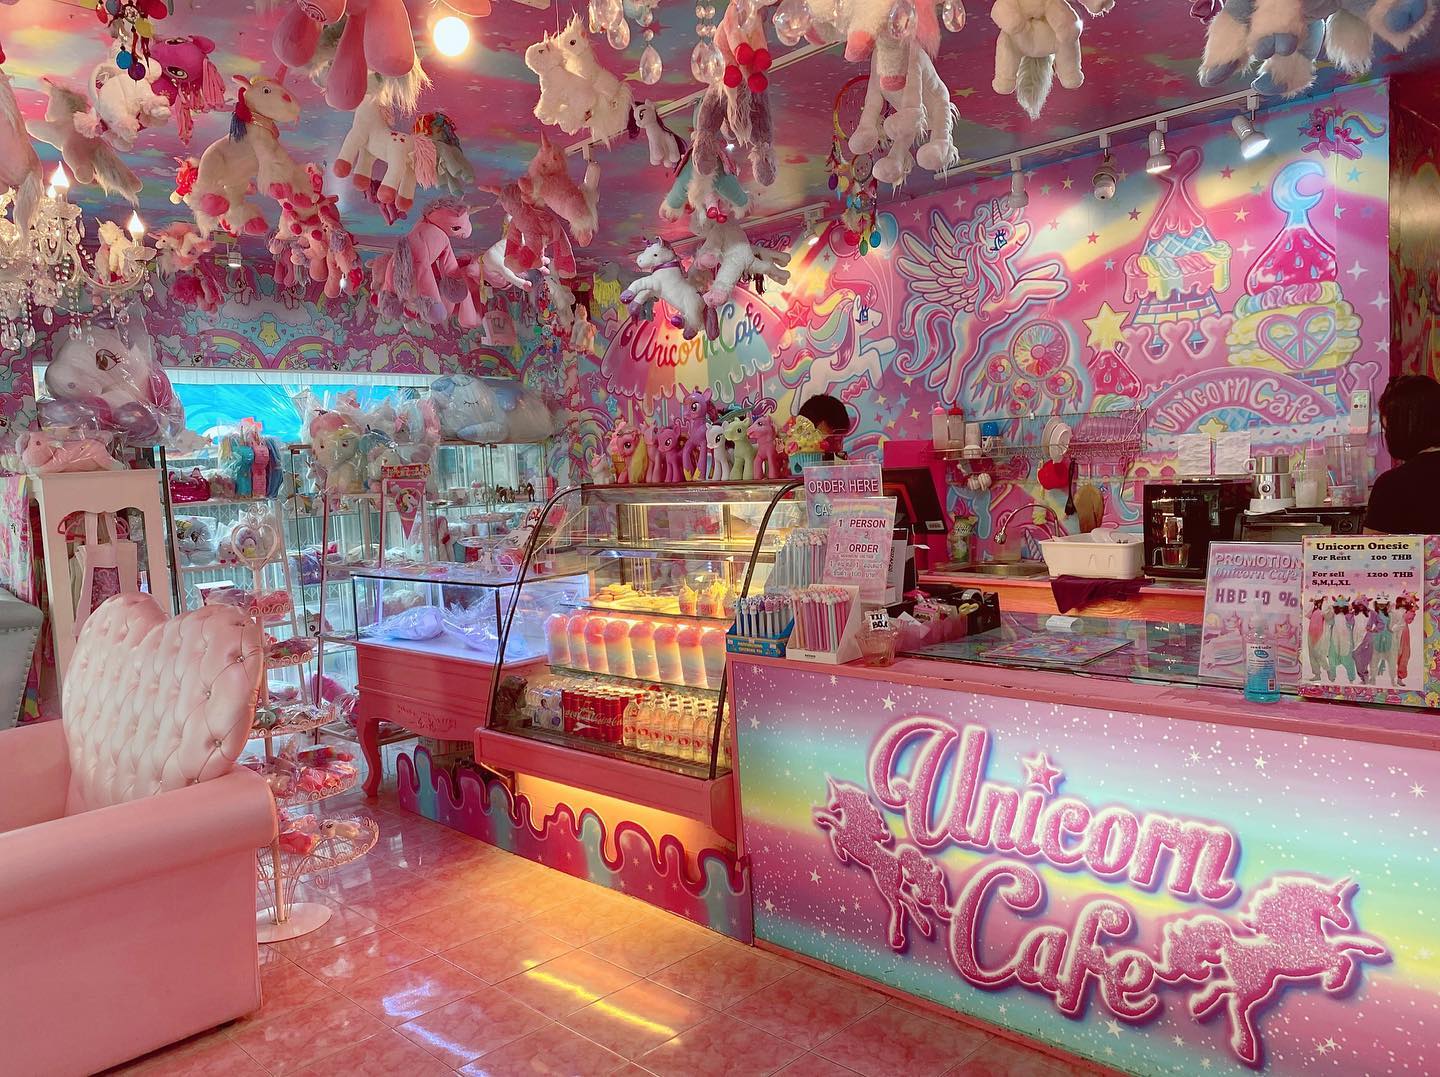 Unicorn Cafe: Cute Unicorn Theme With European Cuisine